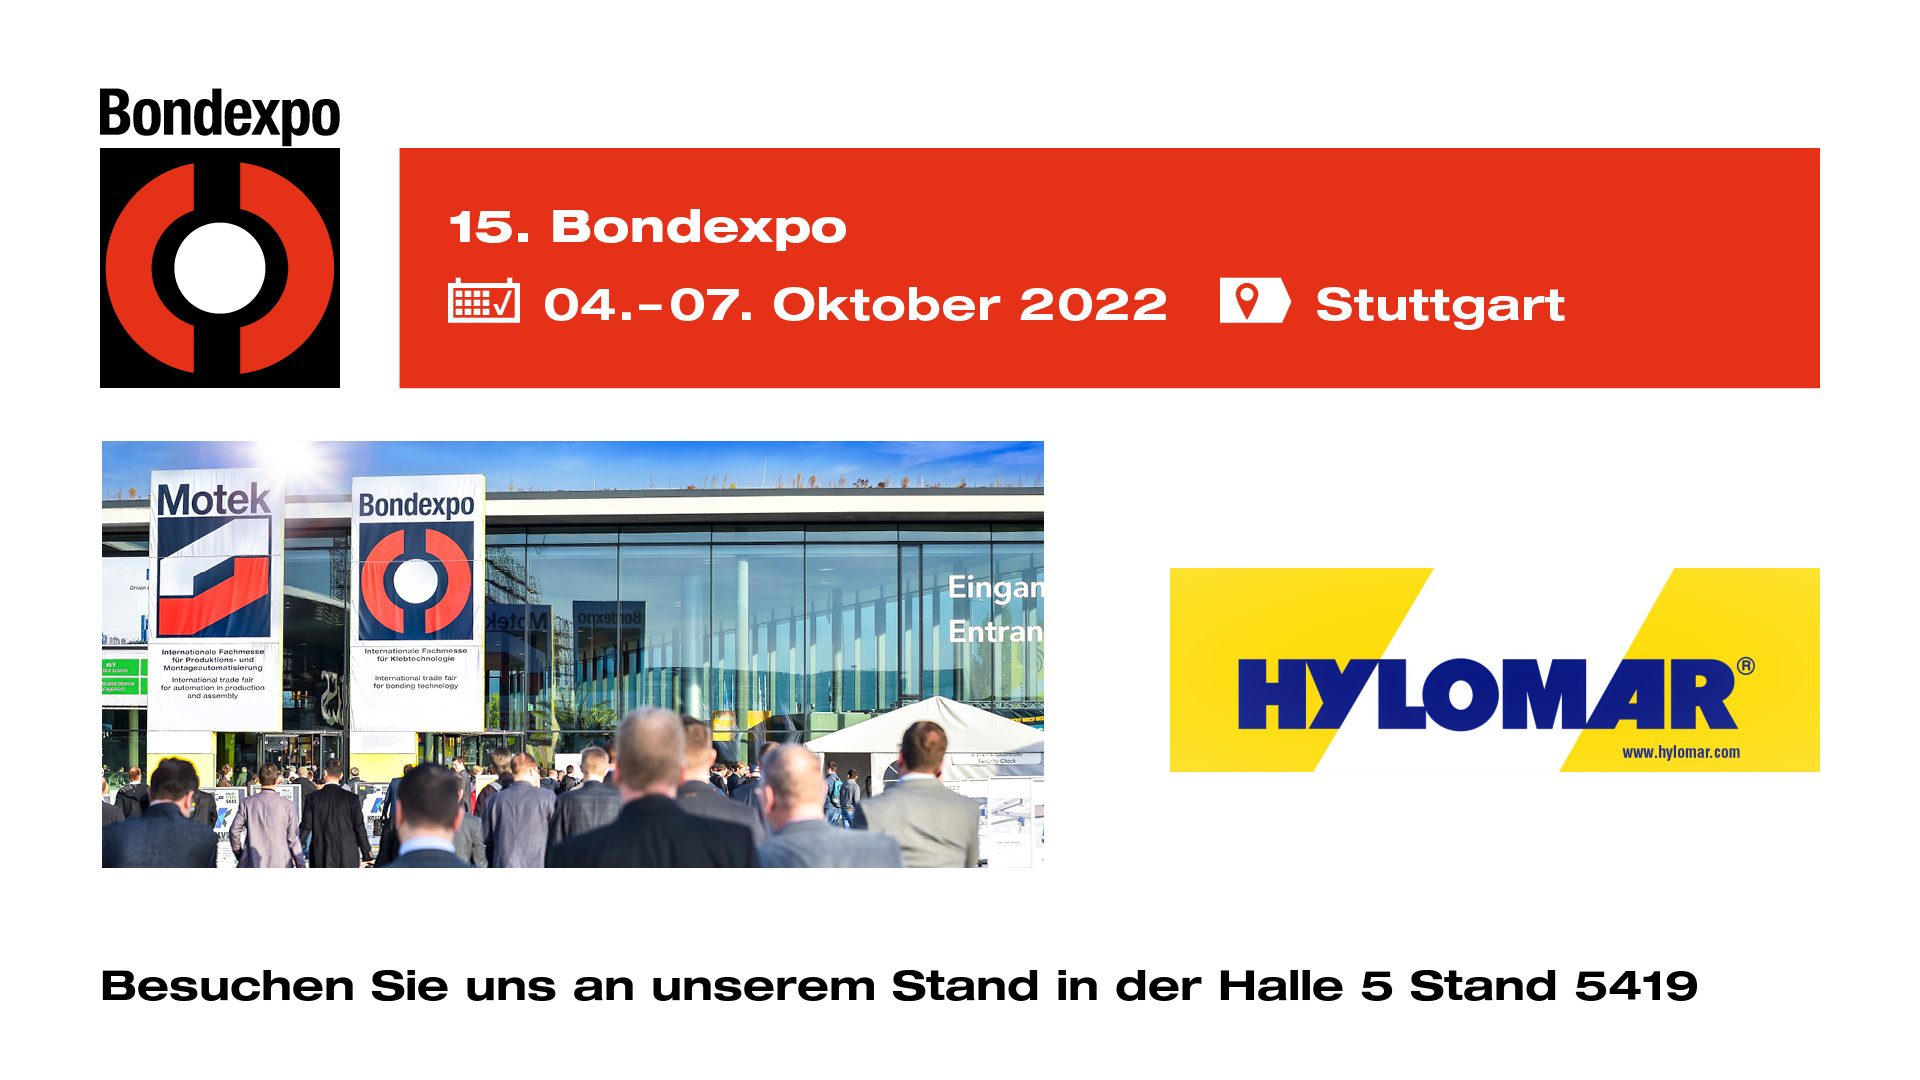 Bondexpo Stuttgart 04. - 07.10.2022